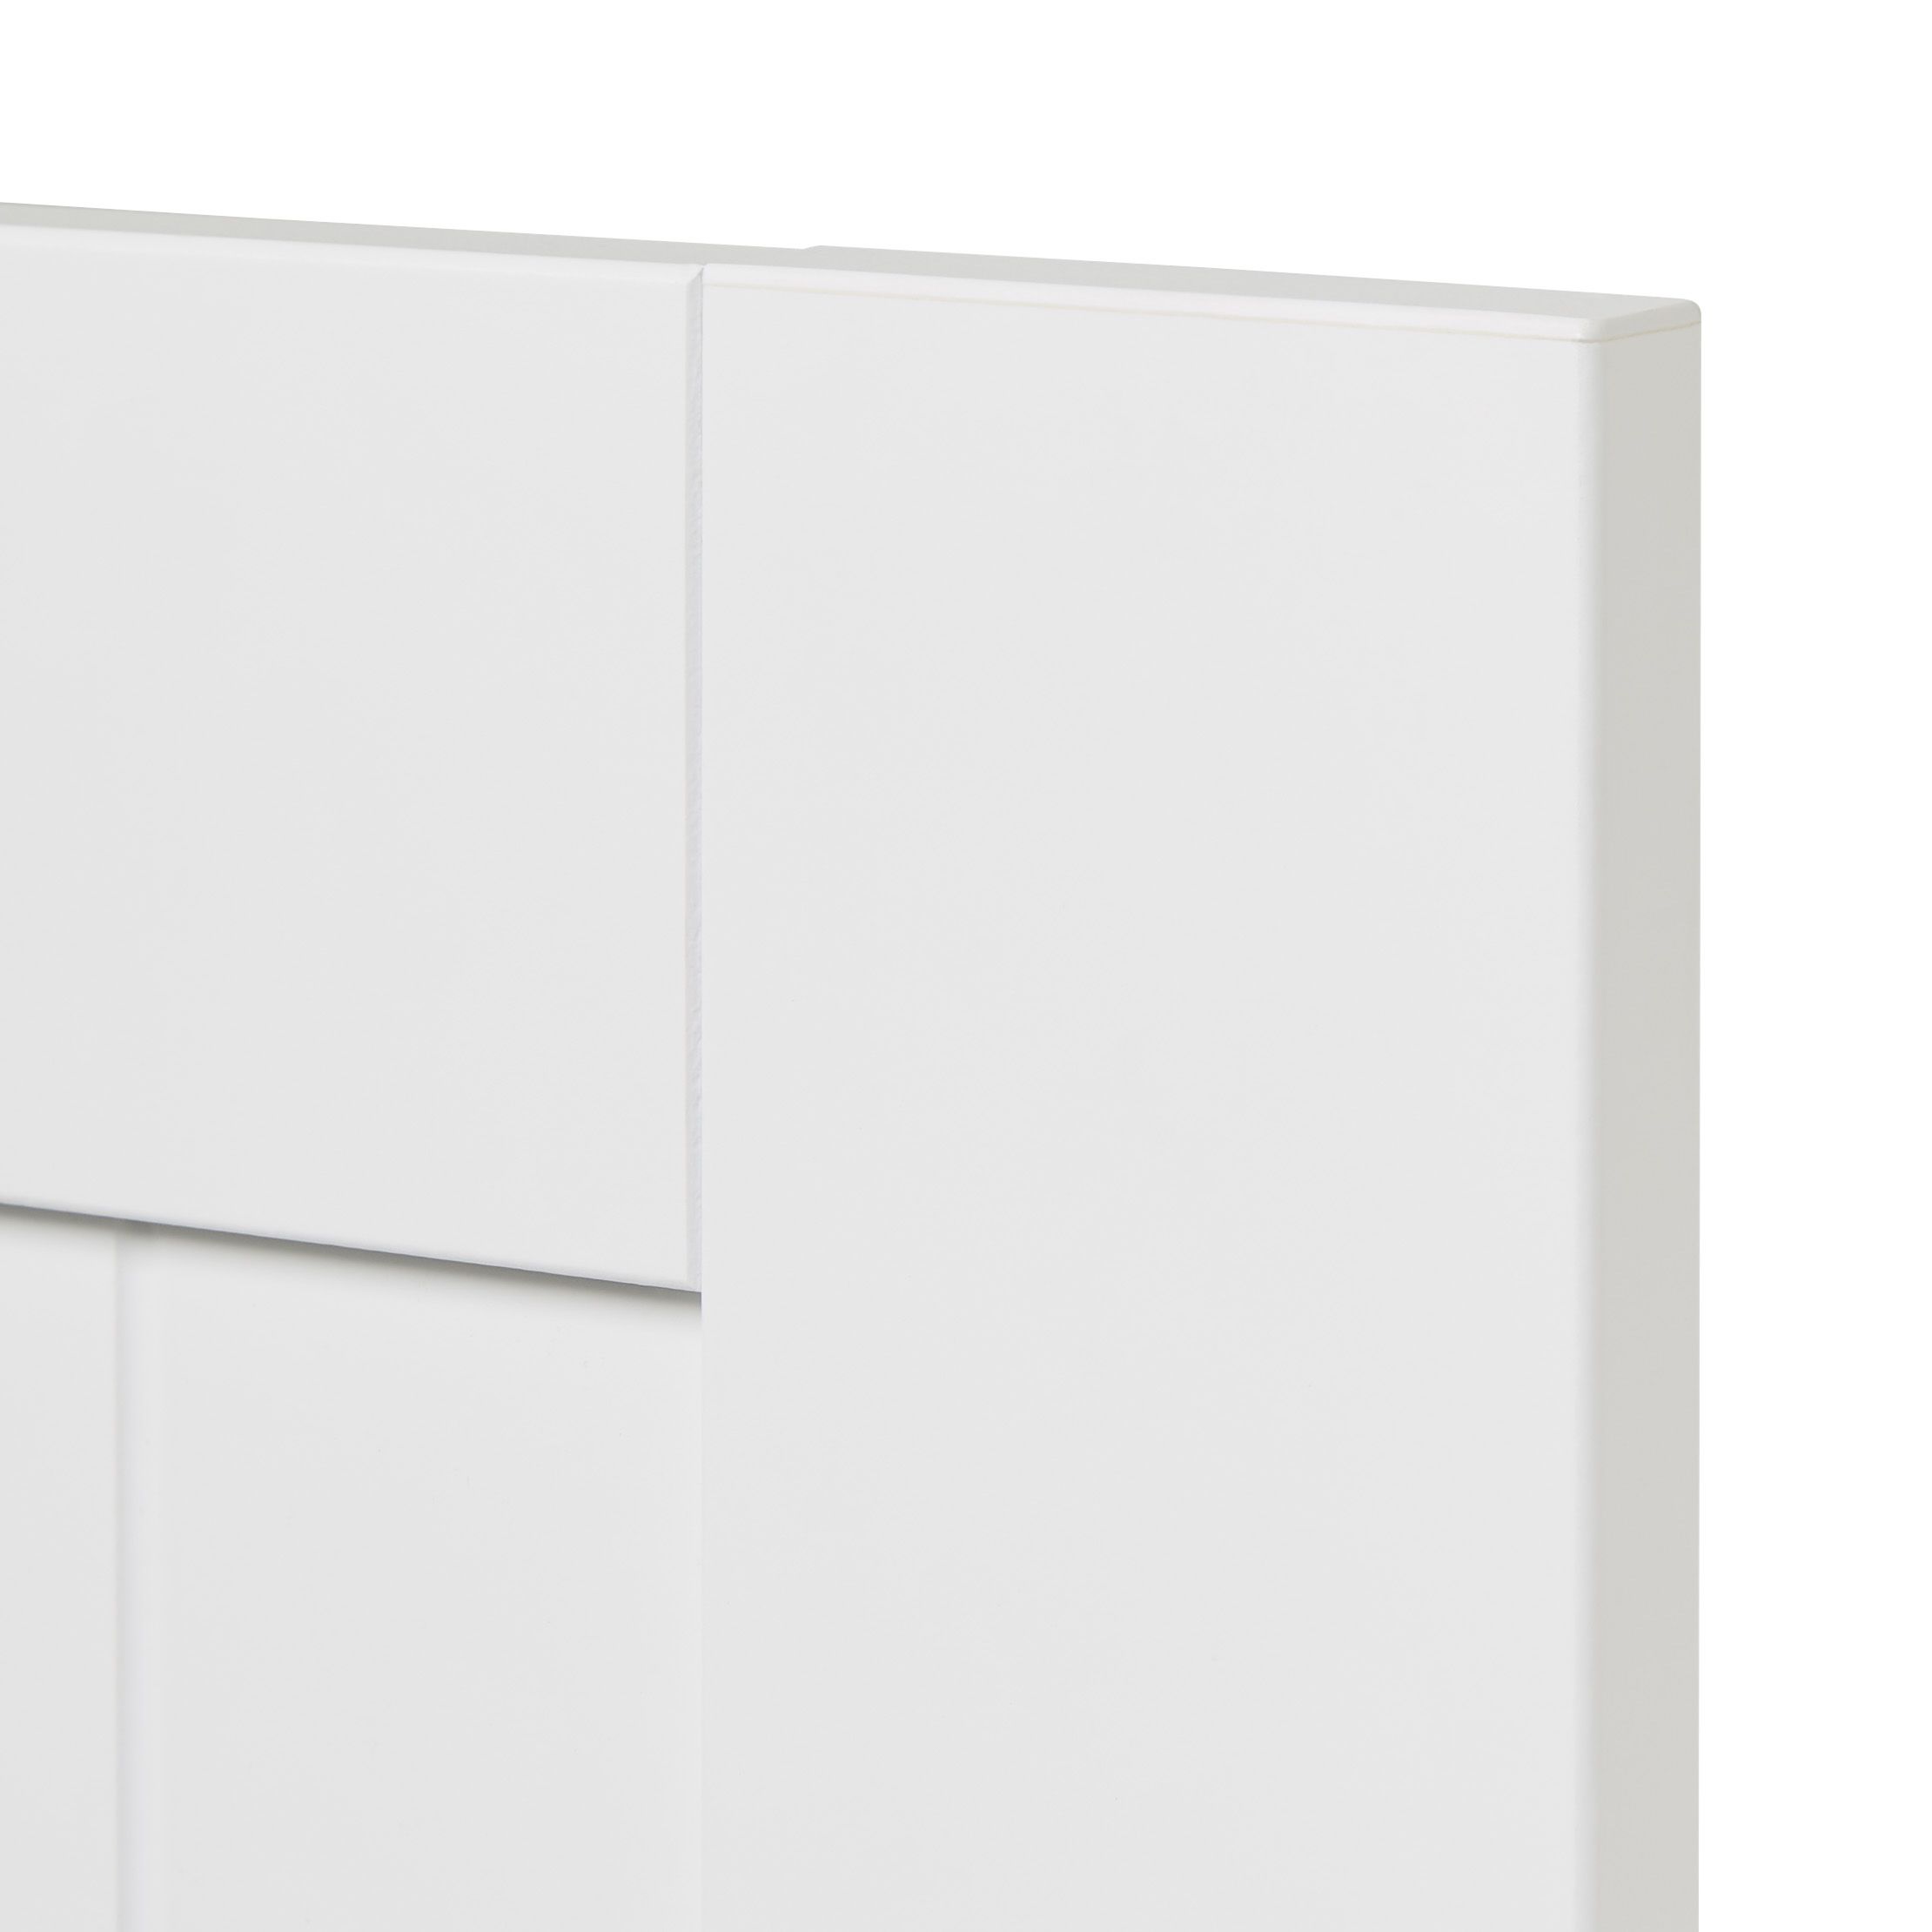 GoodHome Alpinia Matt white tongue & groove shaker Drawerline Cabinet door, (W)300mm (H)715mm (T)18mm